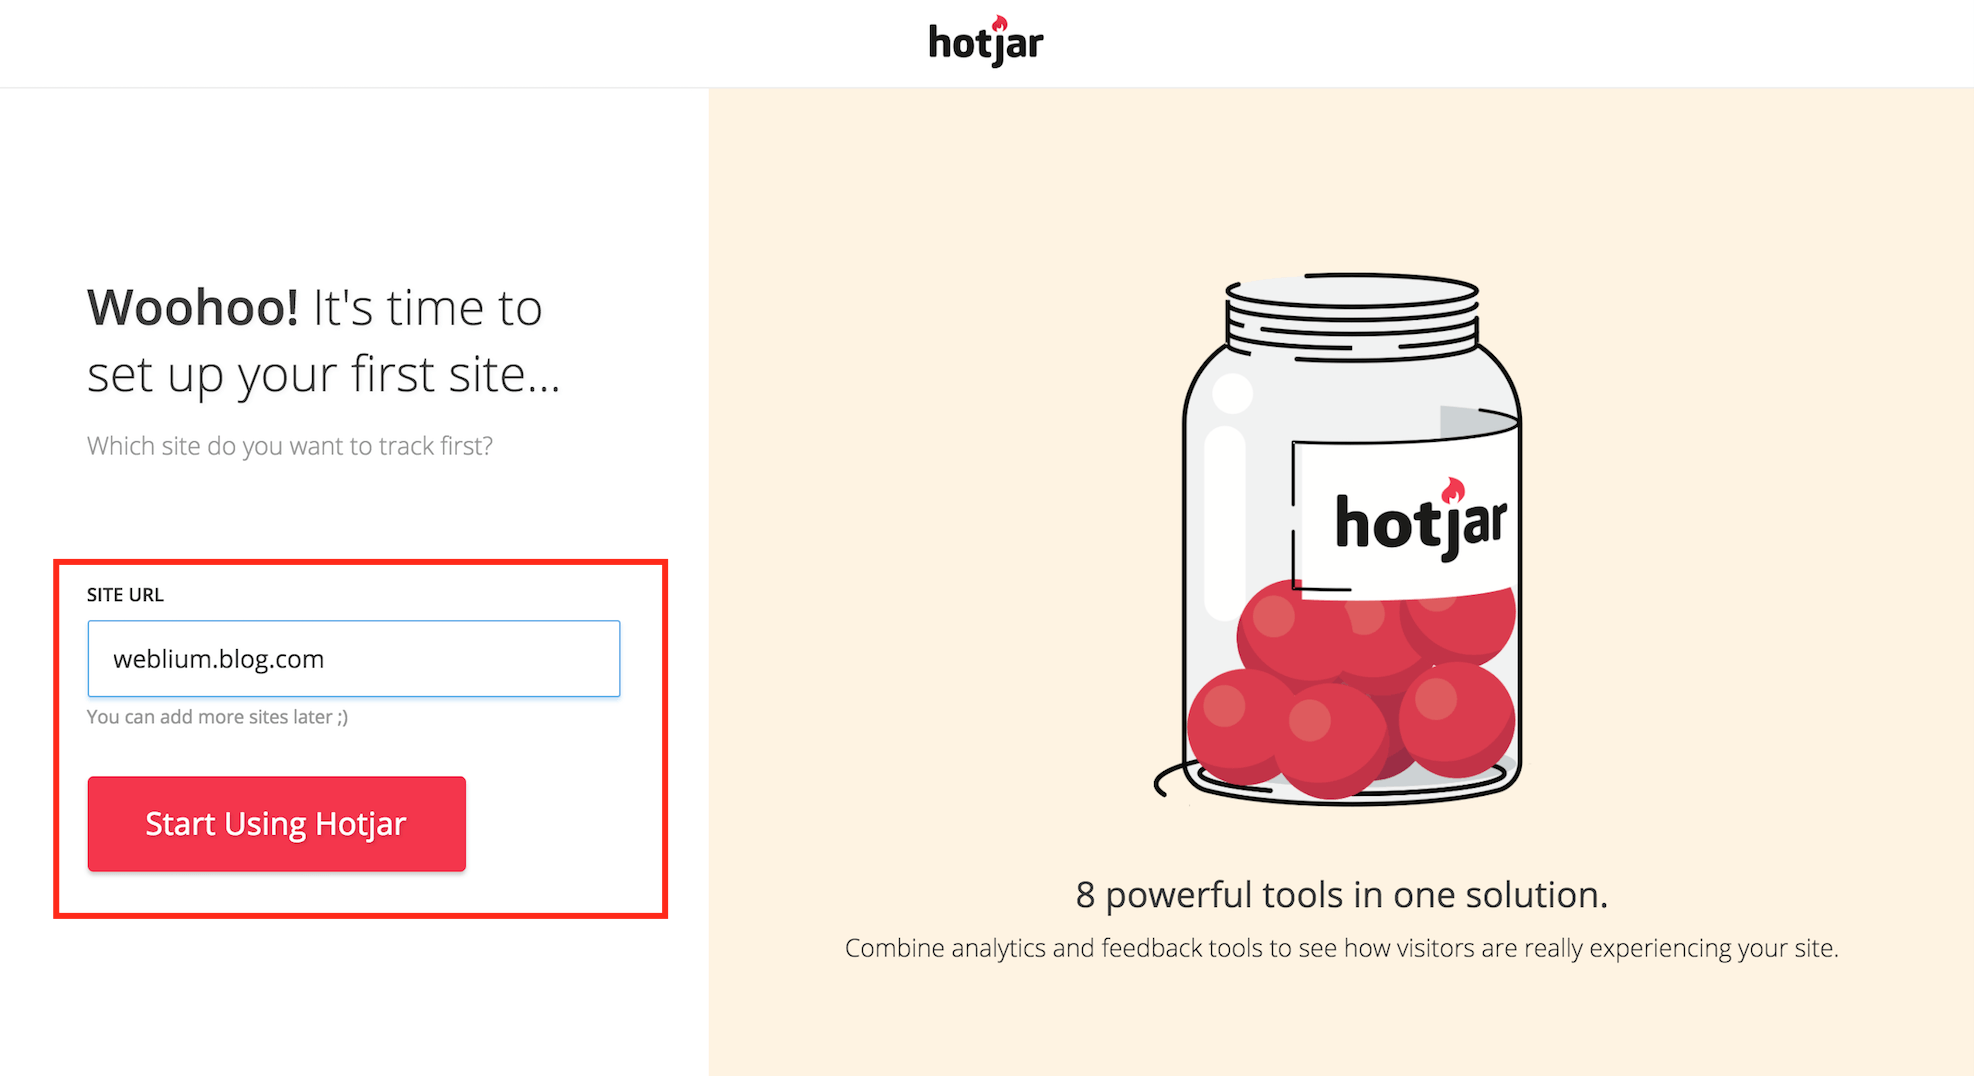  Add site URL and click Start Using Hotjar